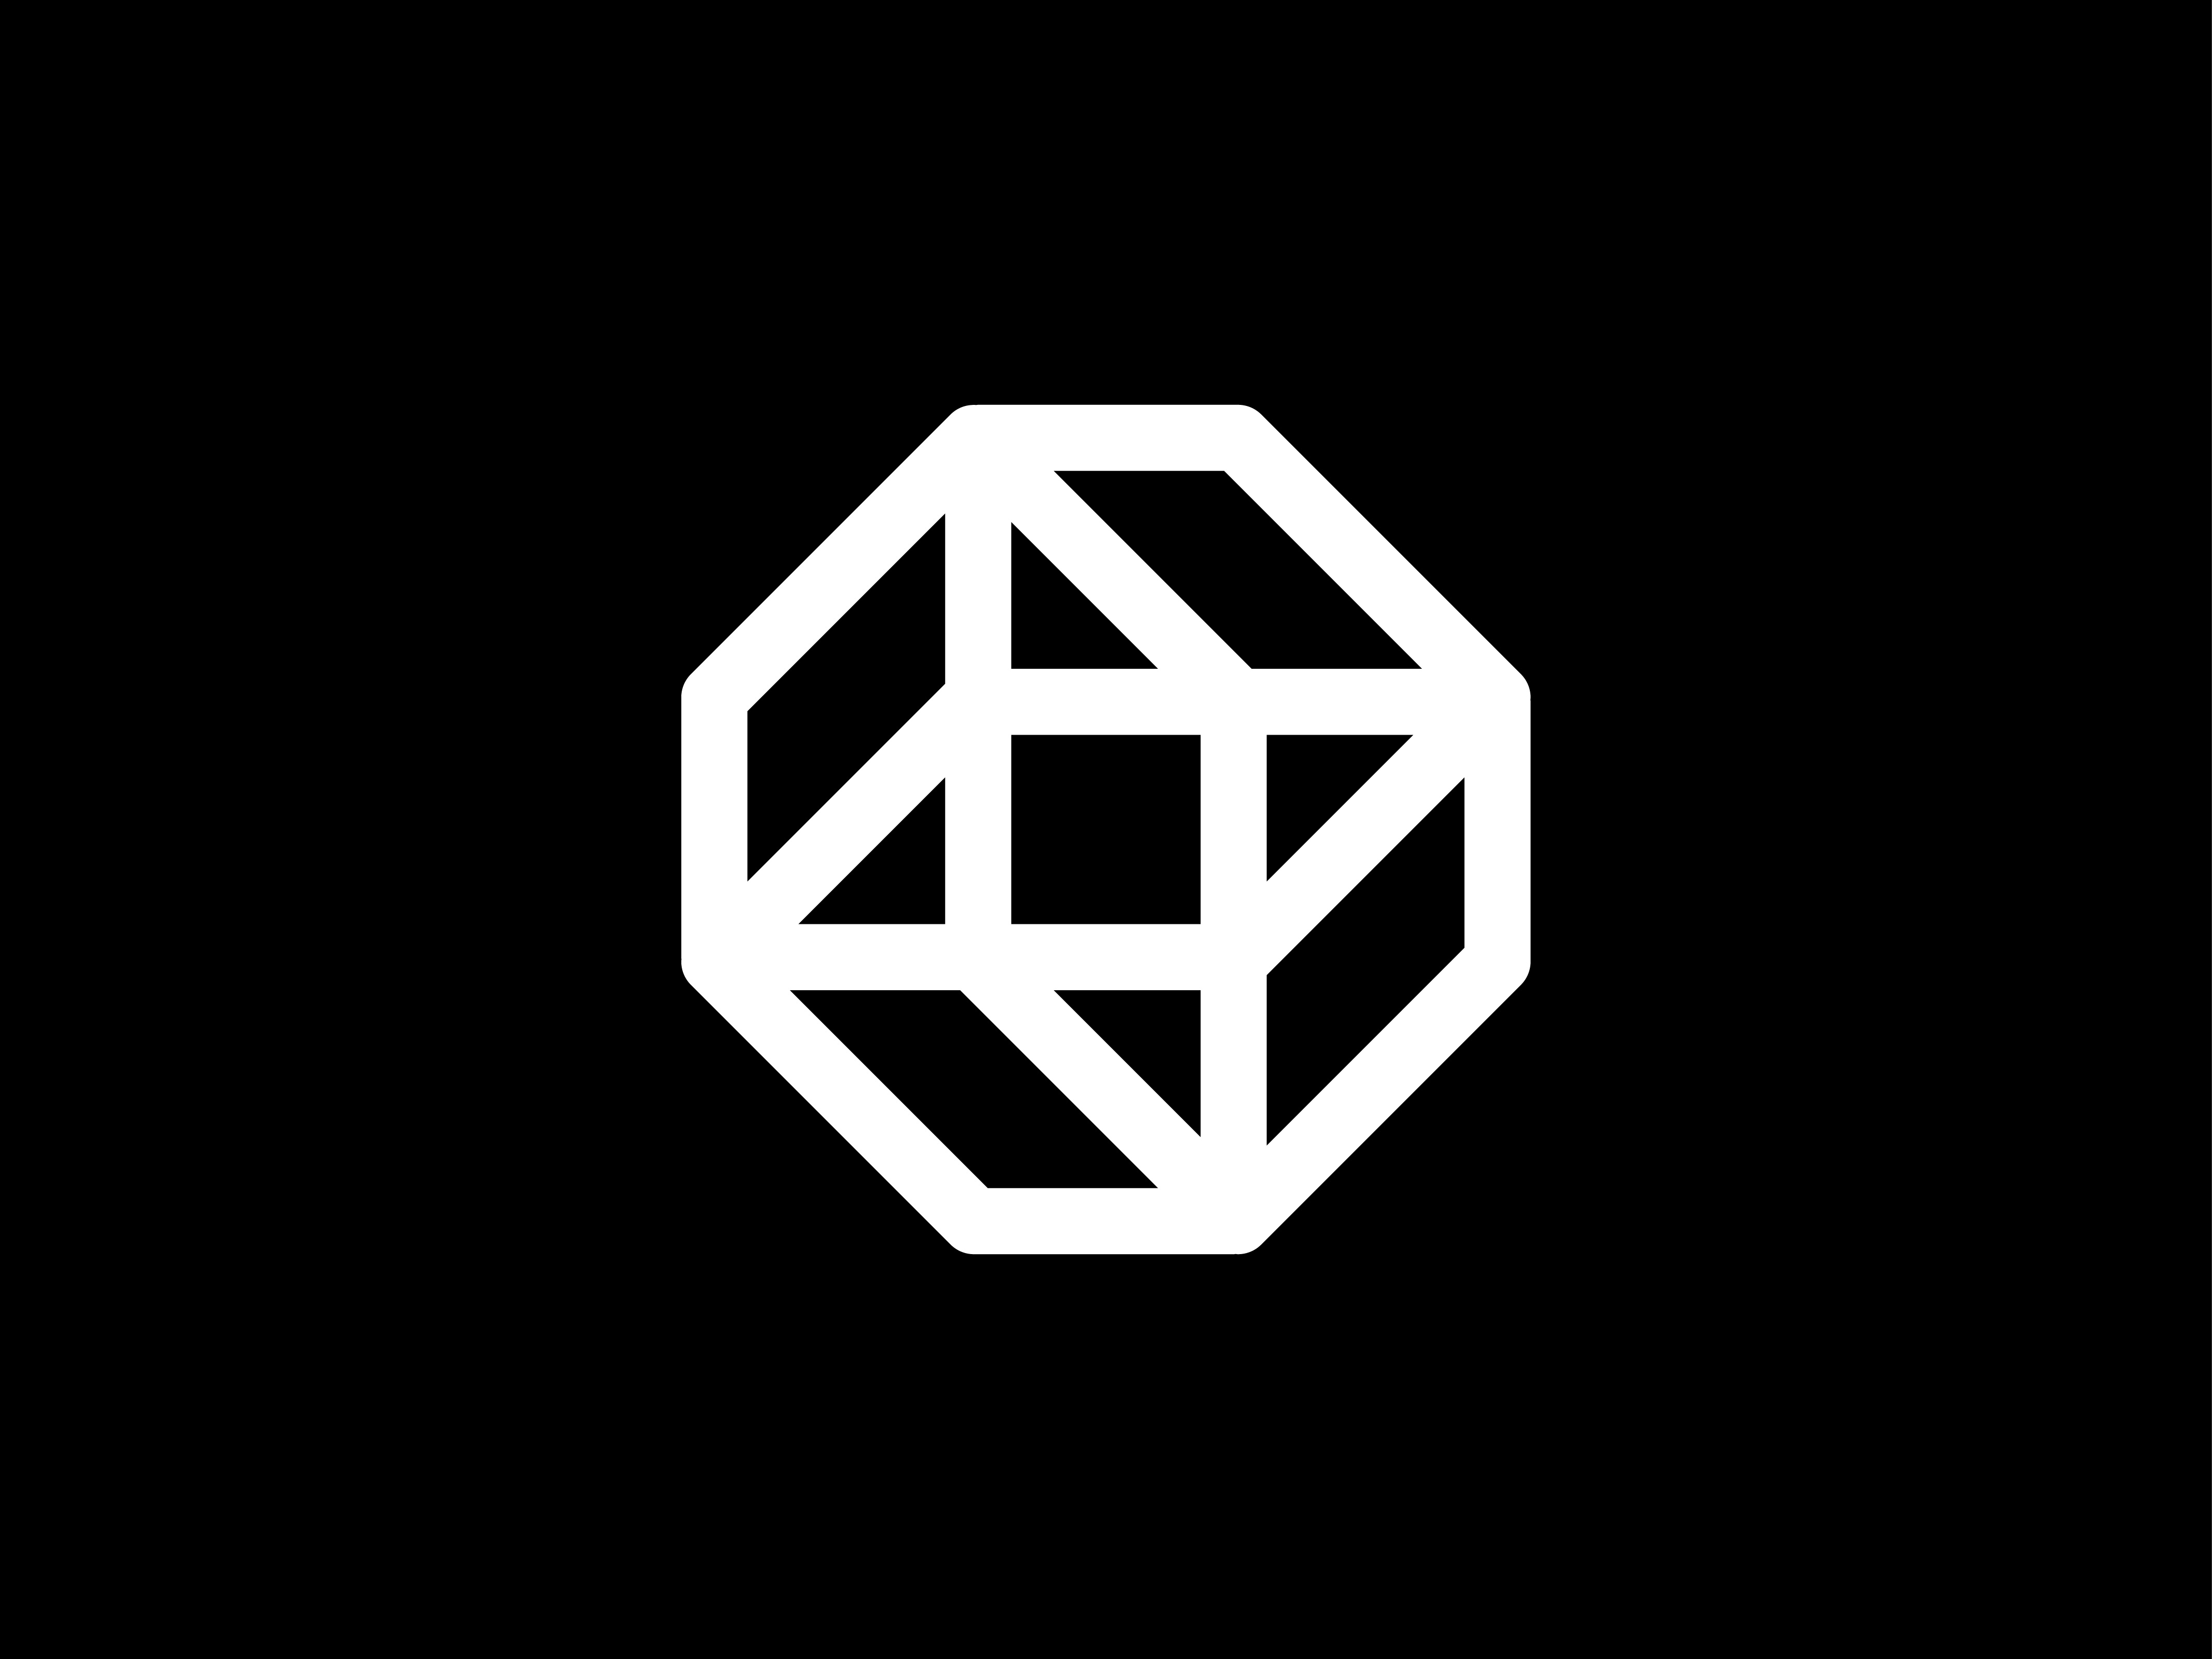 Abstract, Polygonal, Brand, Symbol, Logo Design by Artology 🟢 on Dribbble